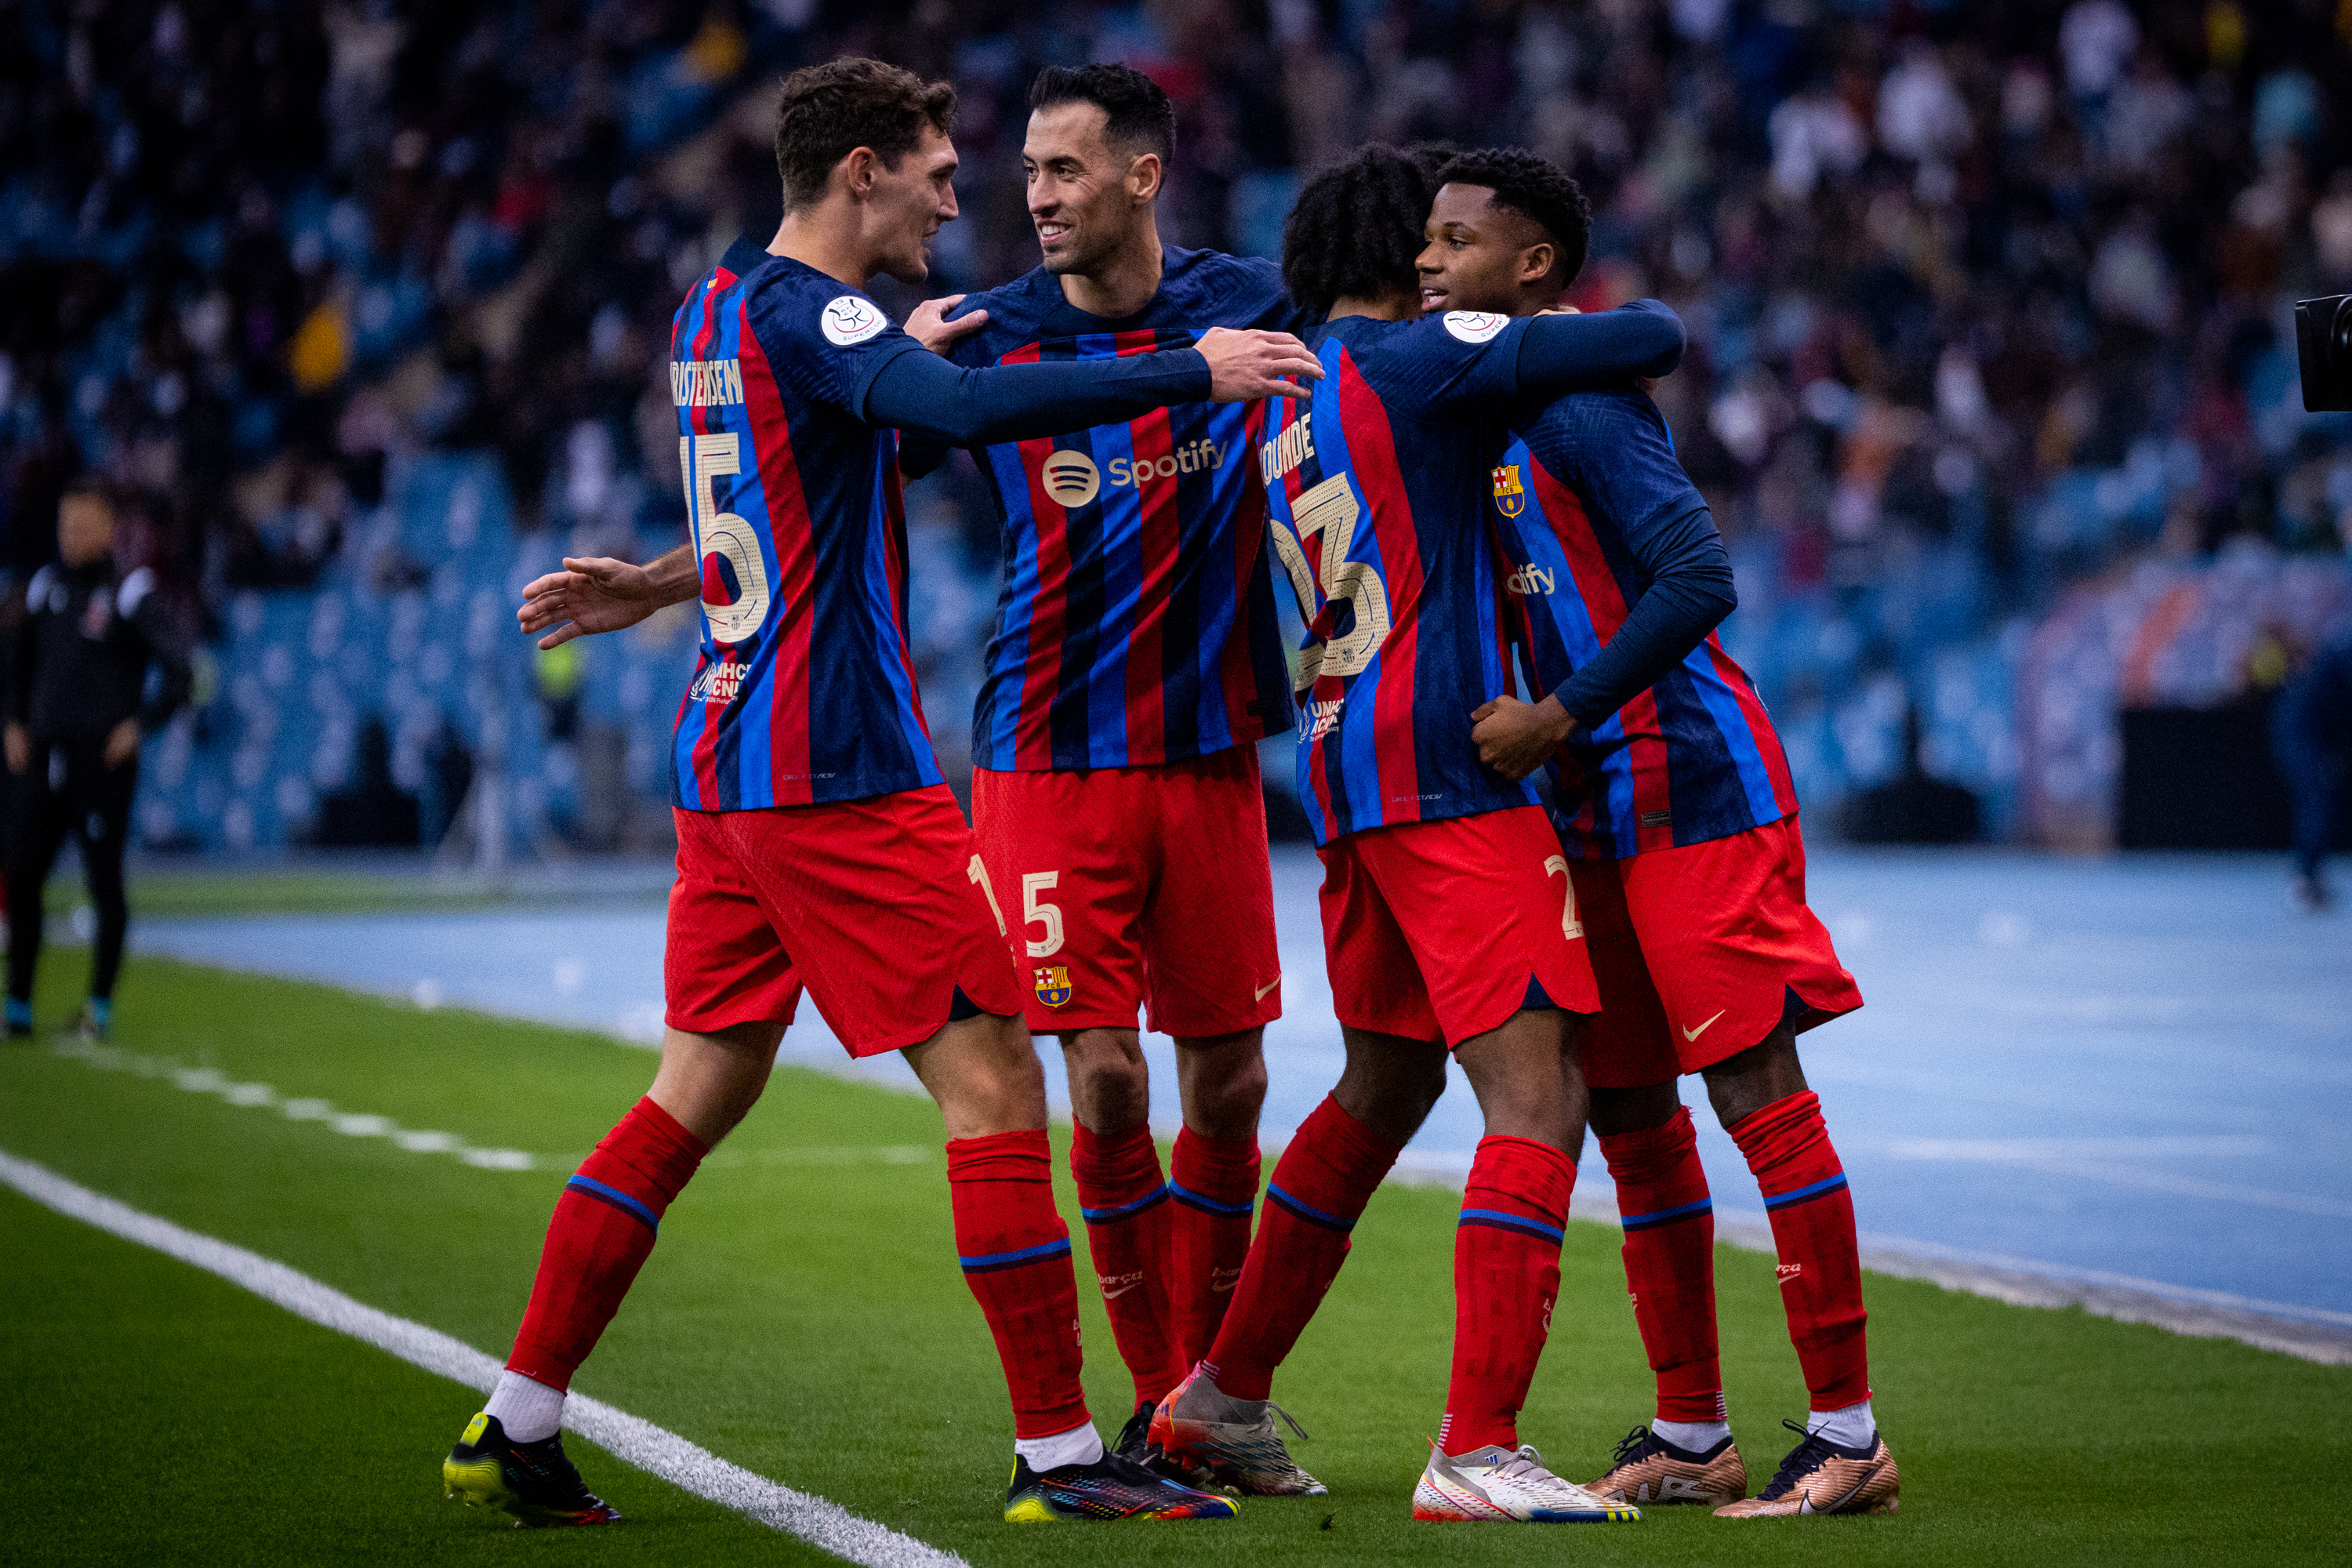 Real Betis 2-2 FC Barcelona Super-finalists on penalties (2-4)